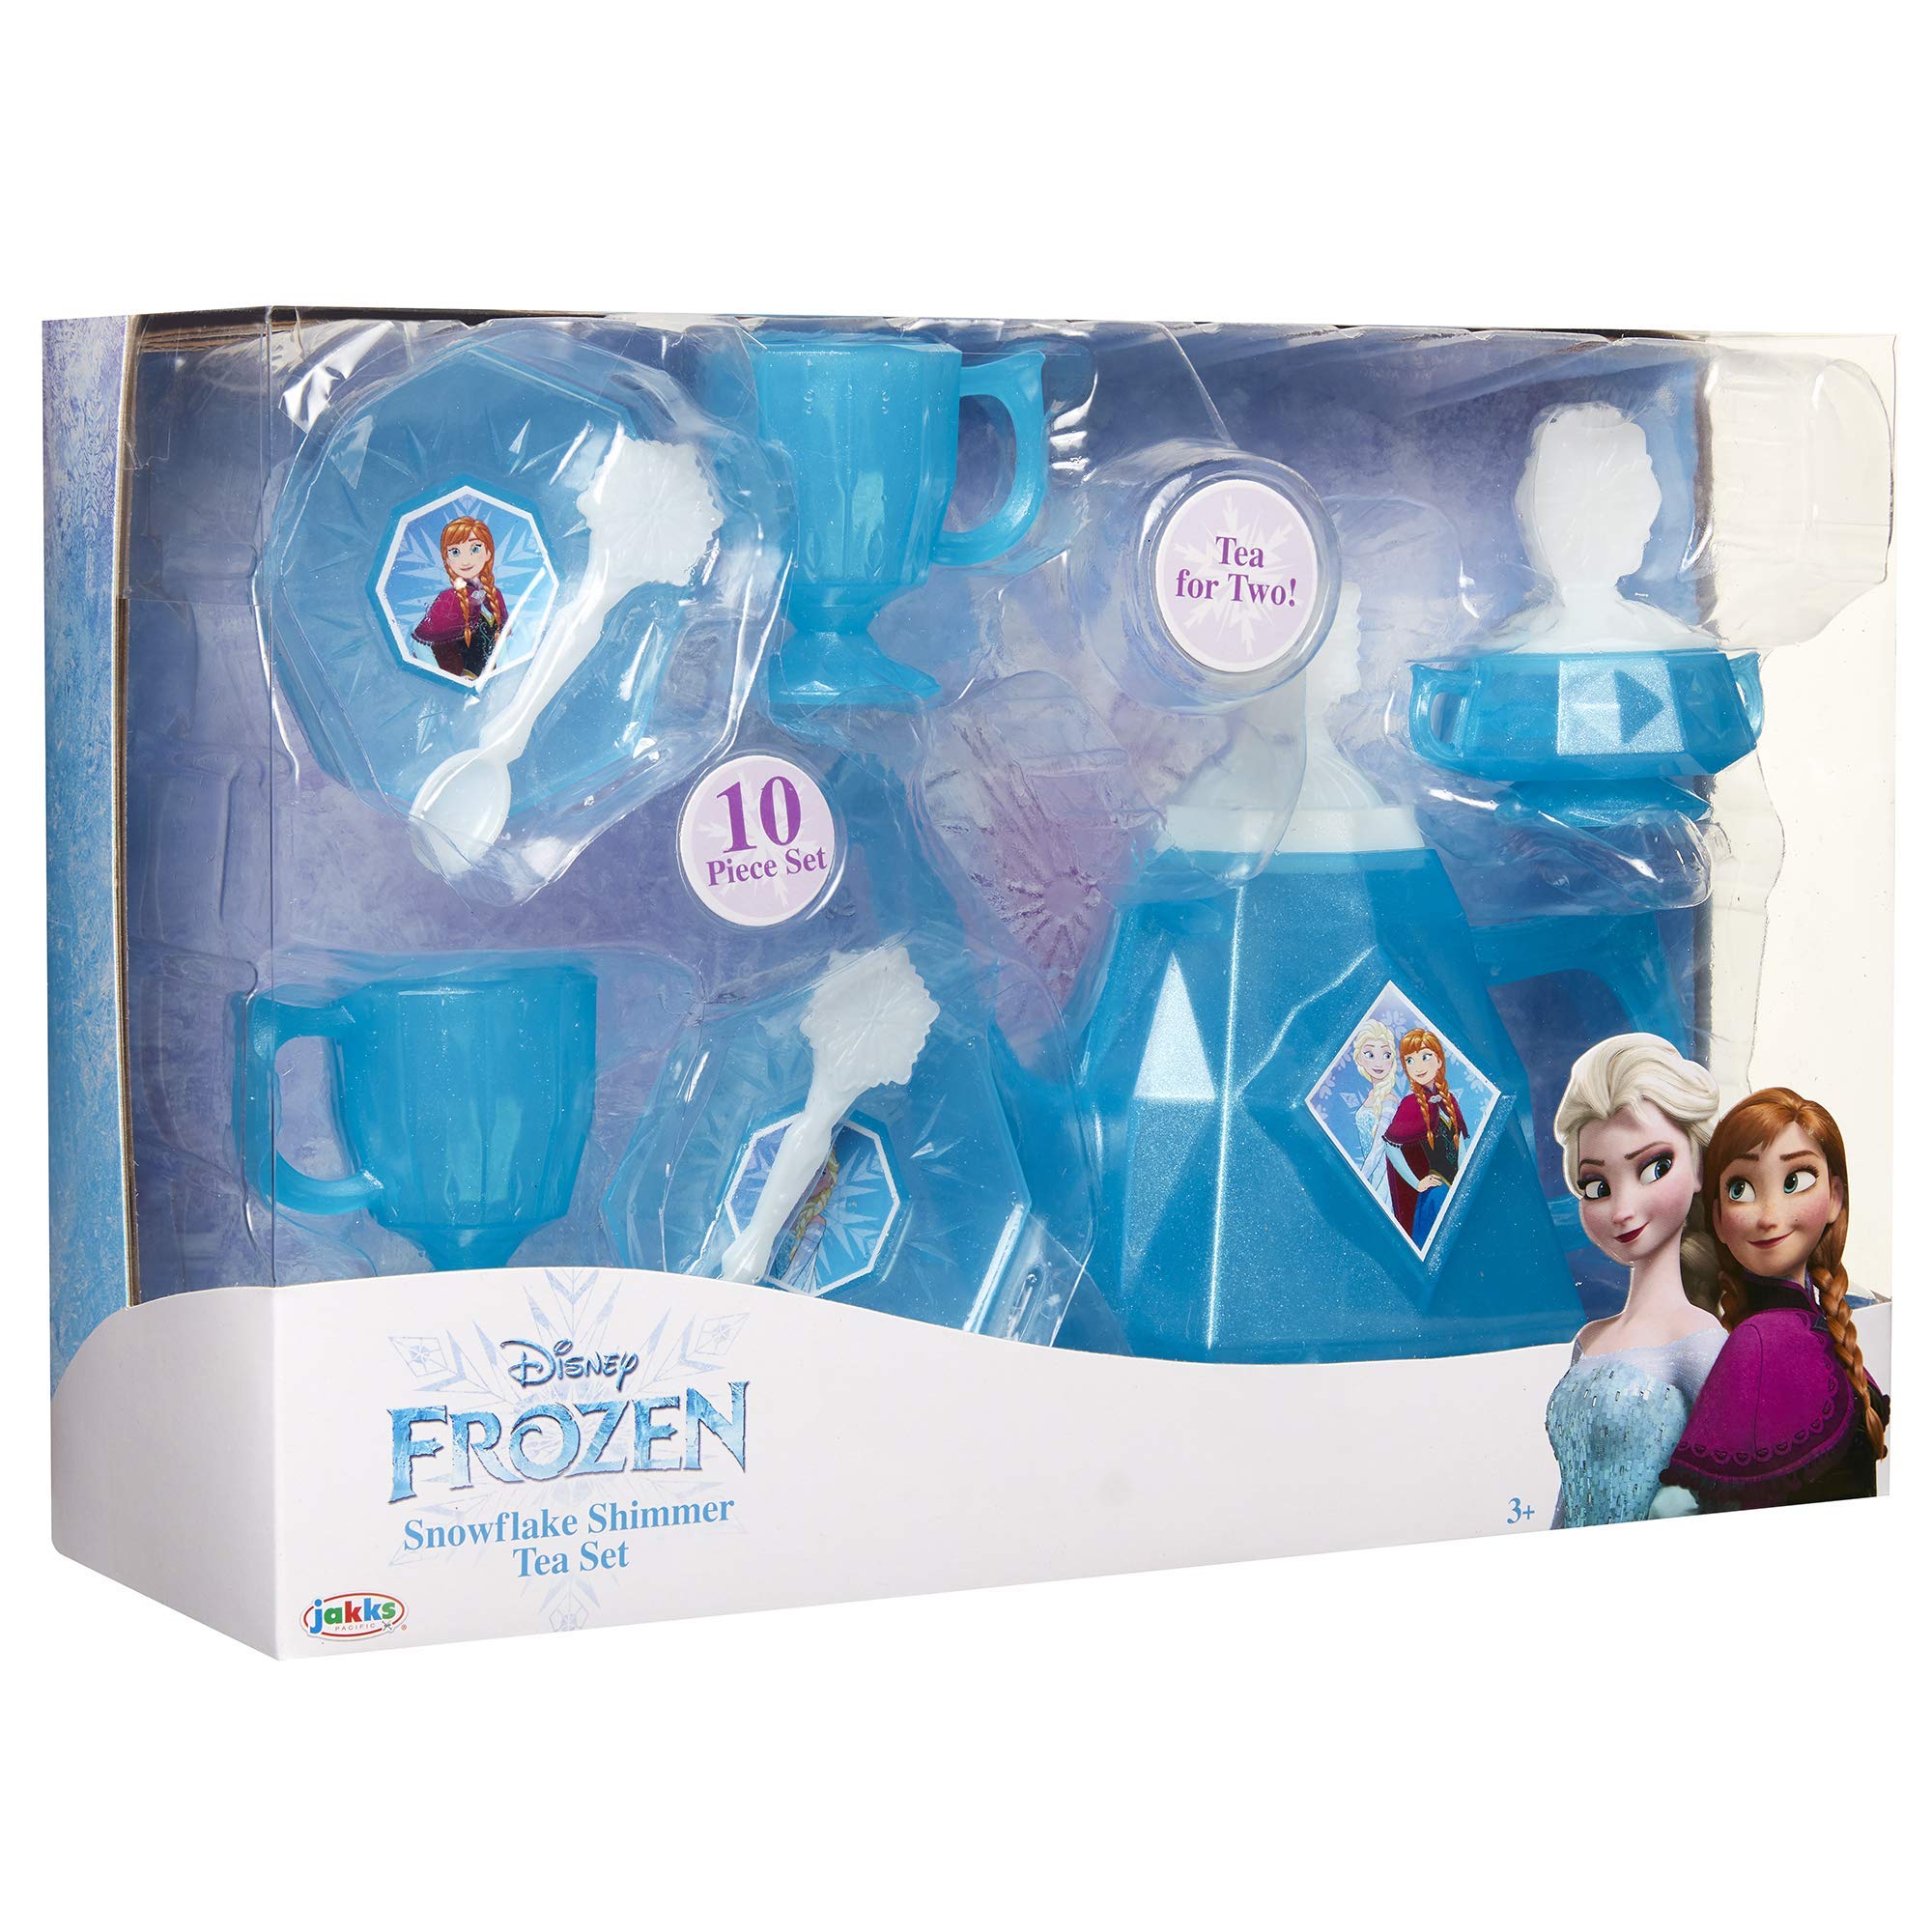 Disney Frozen Tea Set for Girls - 10 Piece Tea Party Set - Pretend Tea Time Play Kitchen Toy, Blue